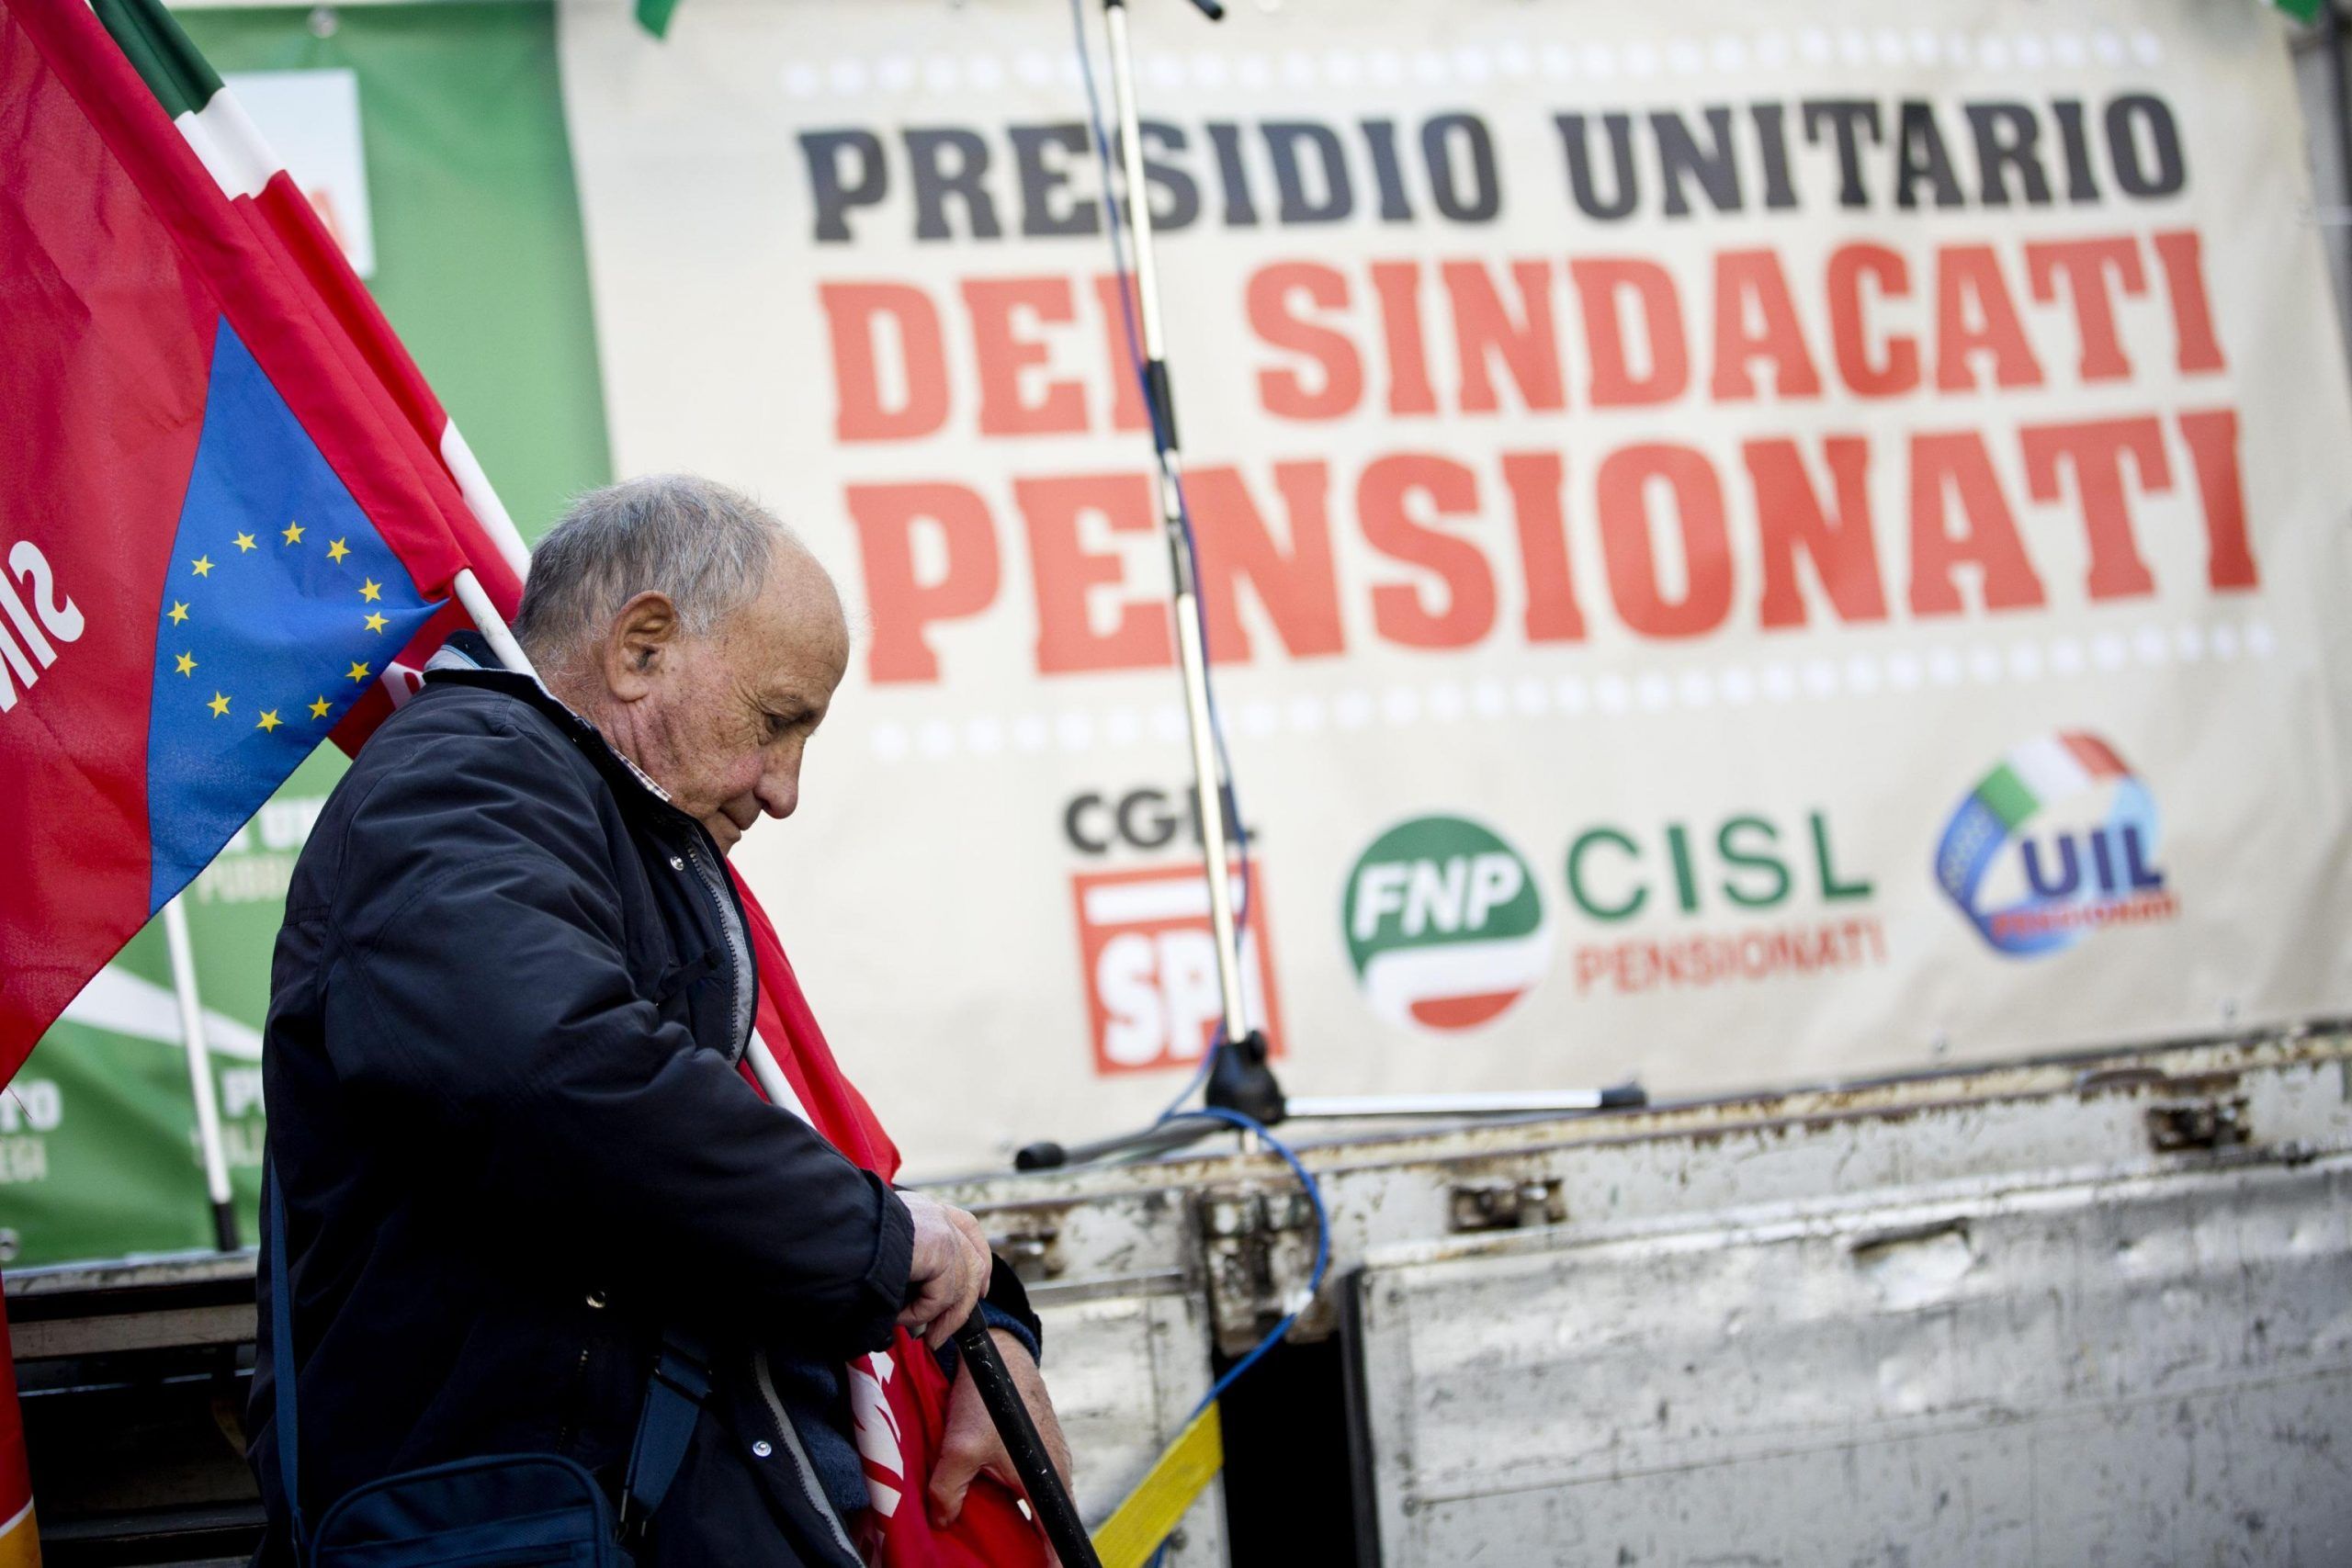 Pensioni: manifestazione a Firenze il 14 ottobre, sindacati in piazza per la flessibilità